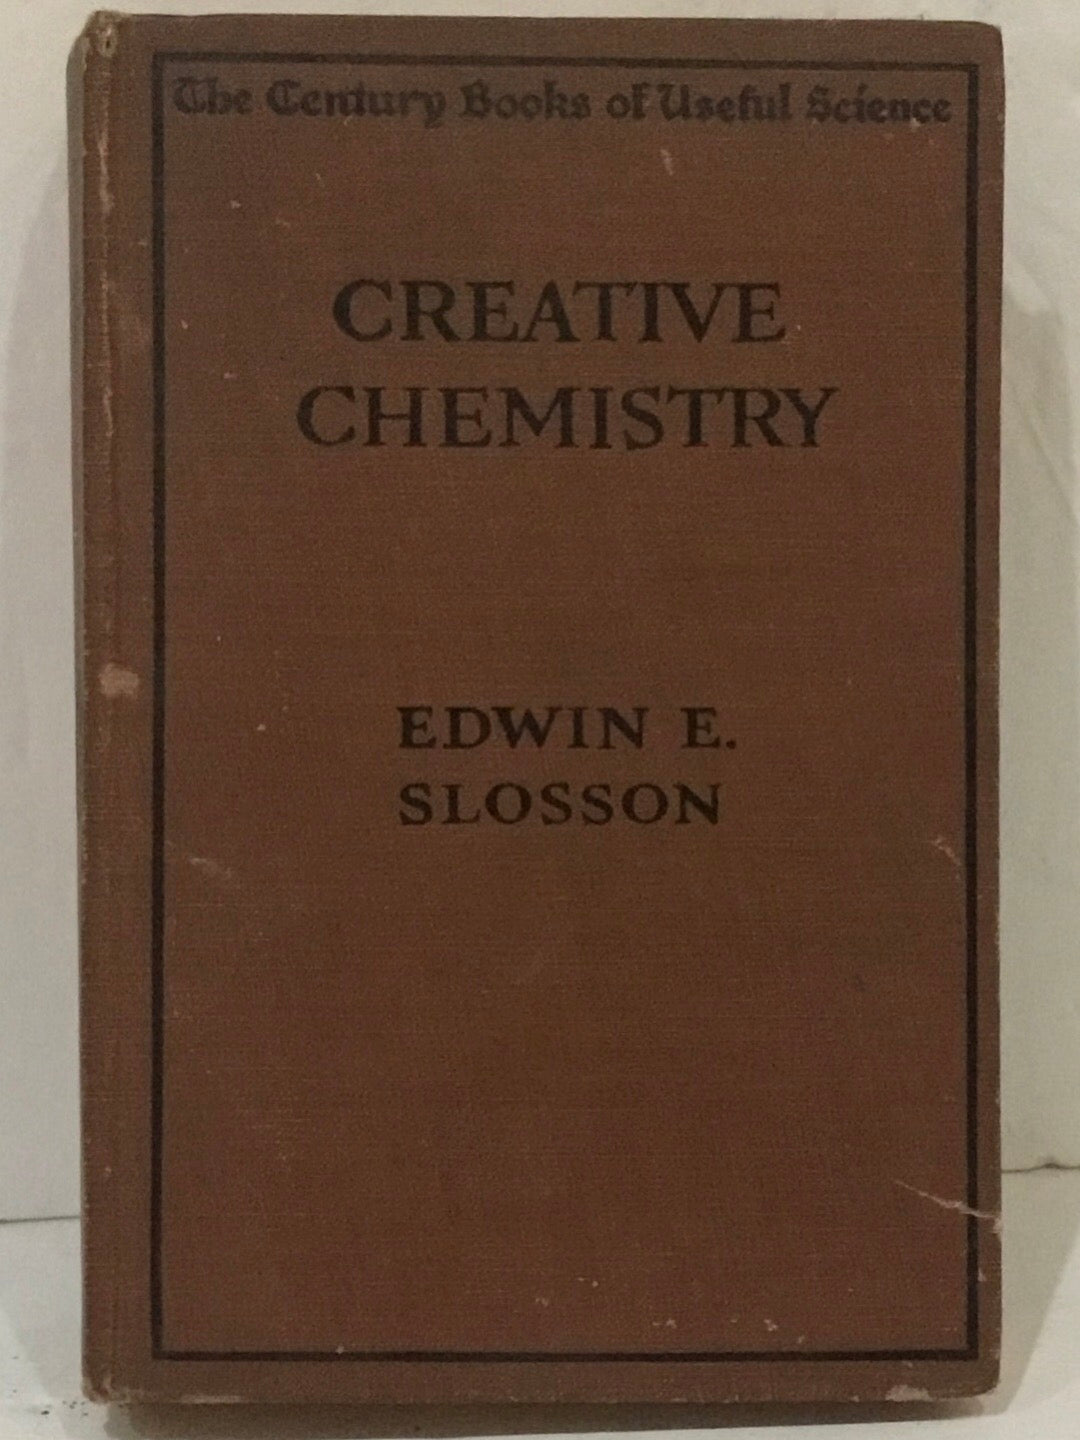 1919 CREATIVE CHEMISTRY BY EDWIN E. SLOSSON